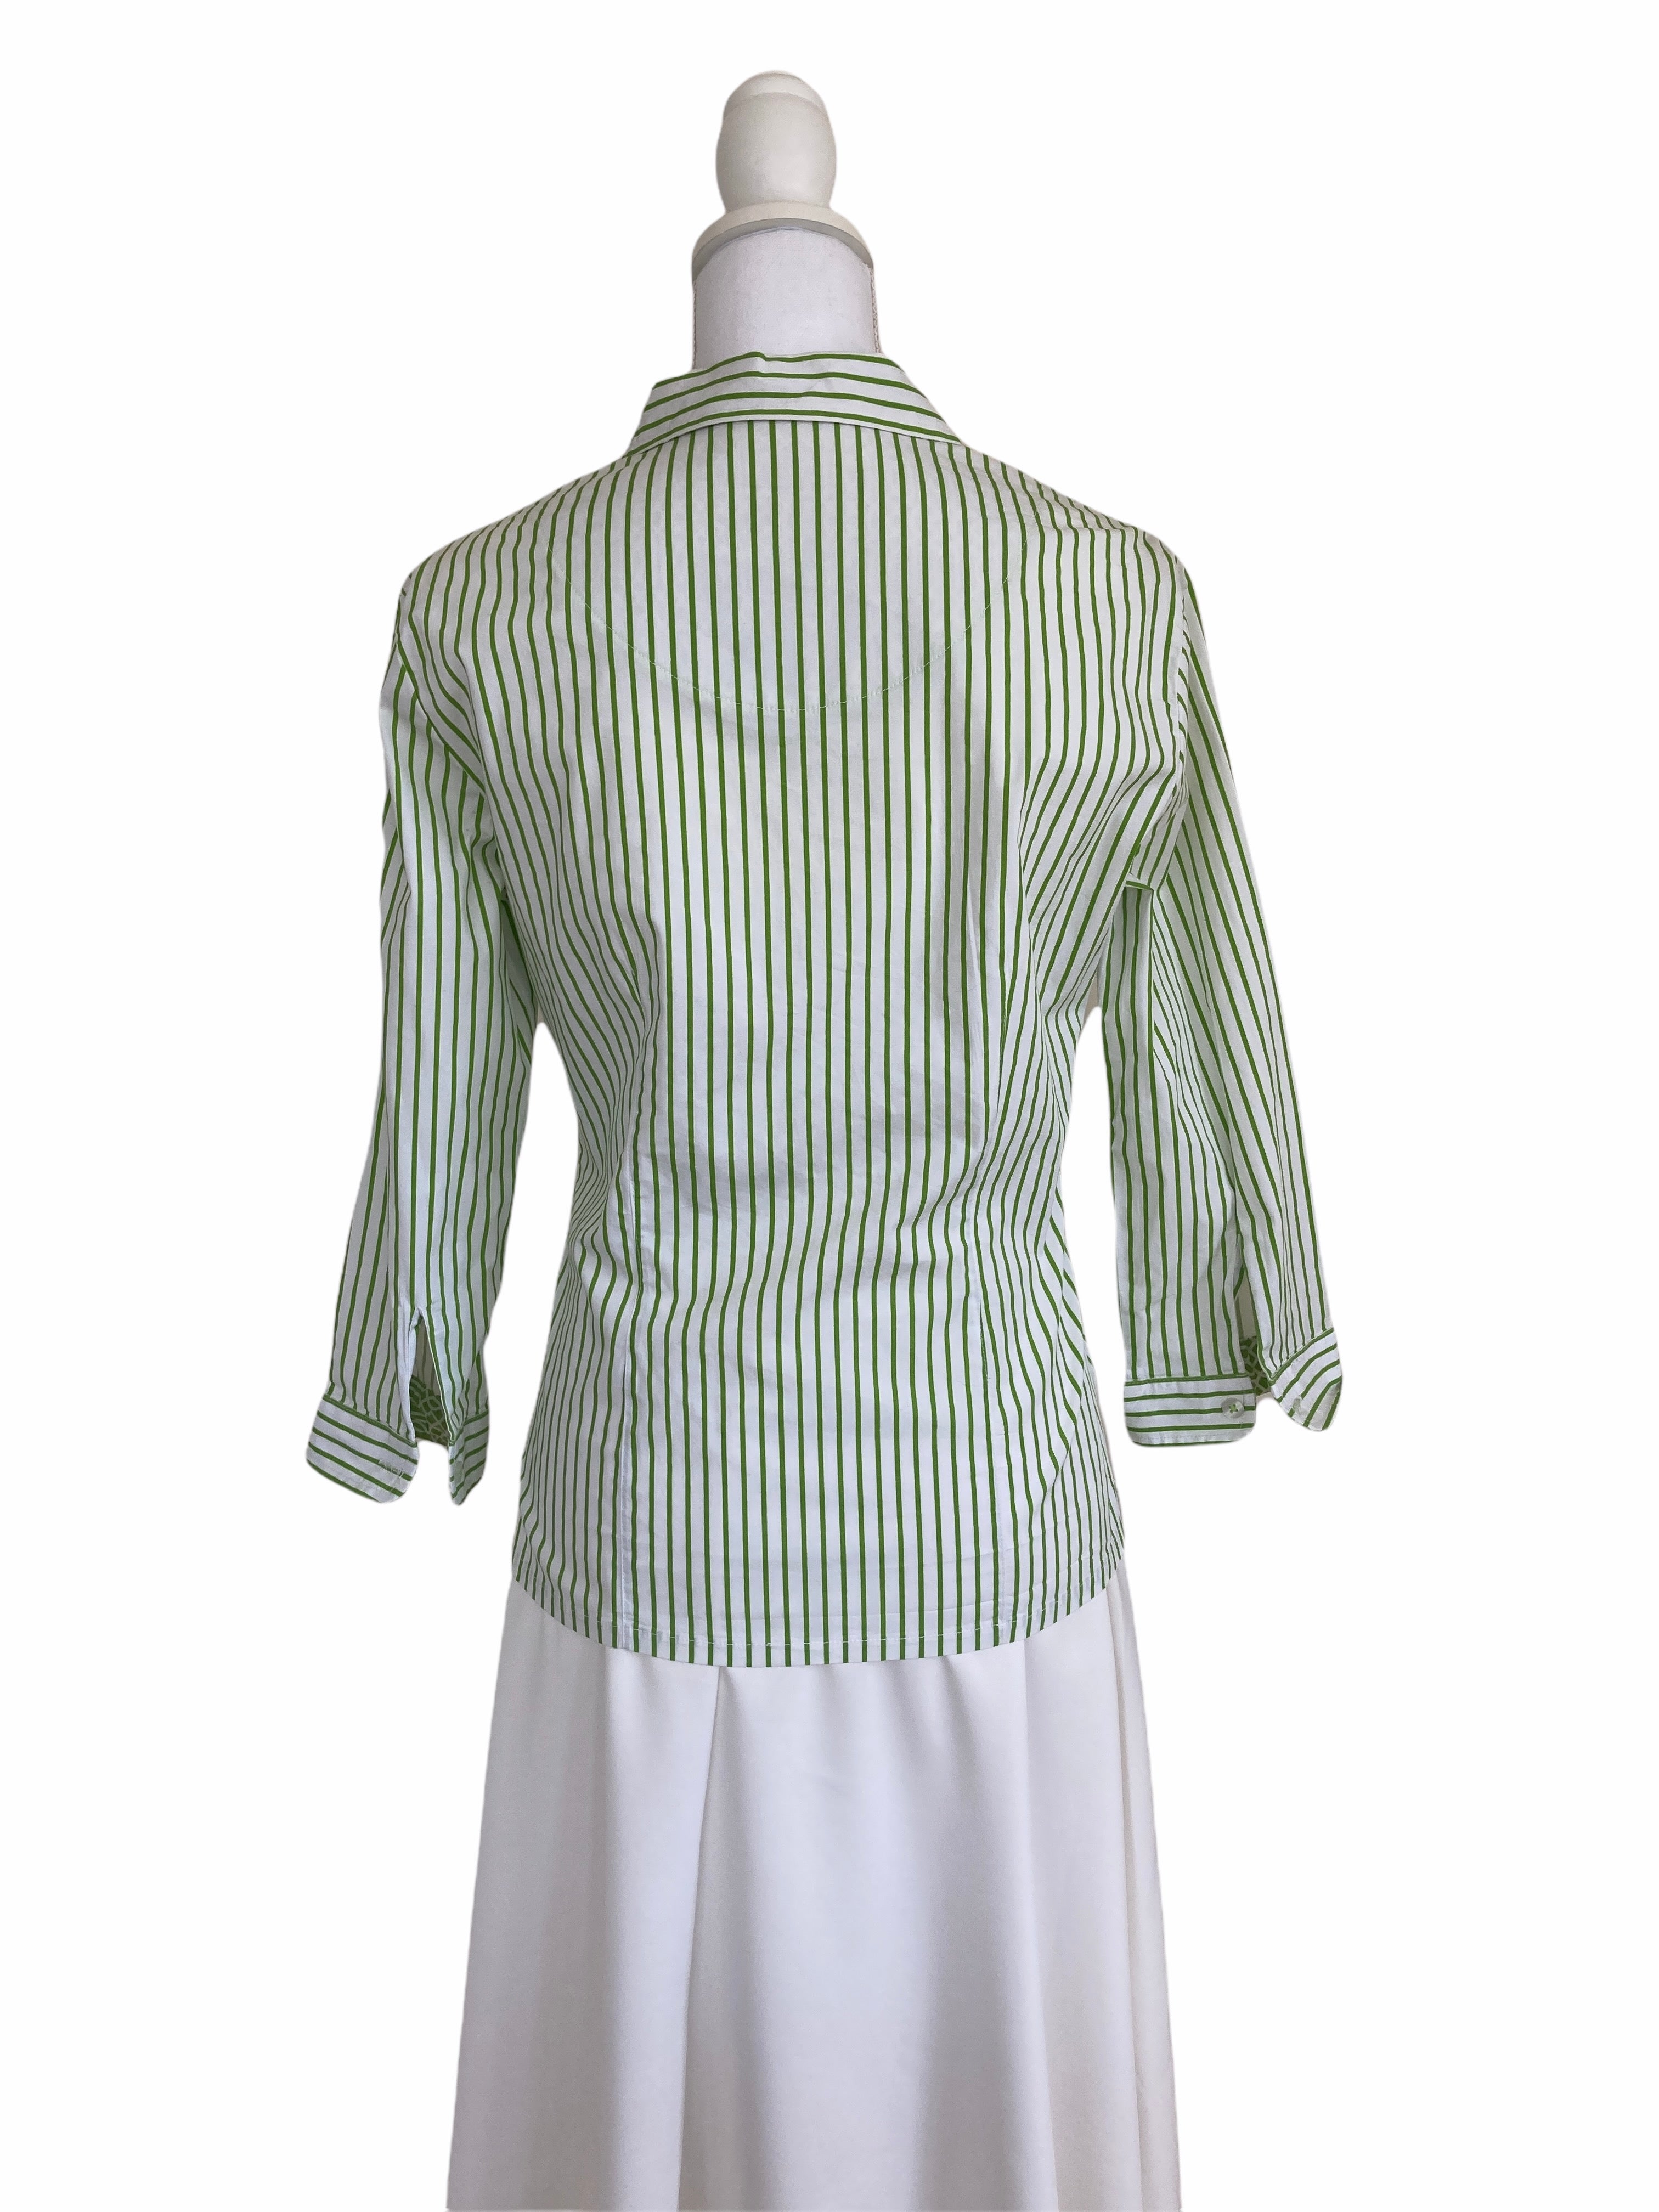 Tizzie Green Striped Shirt, M